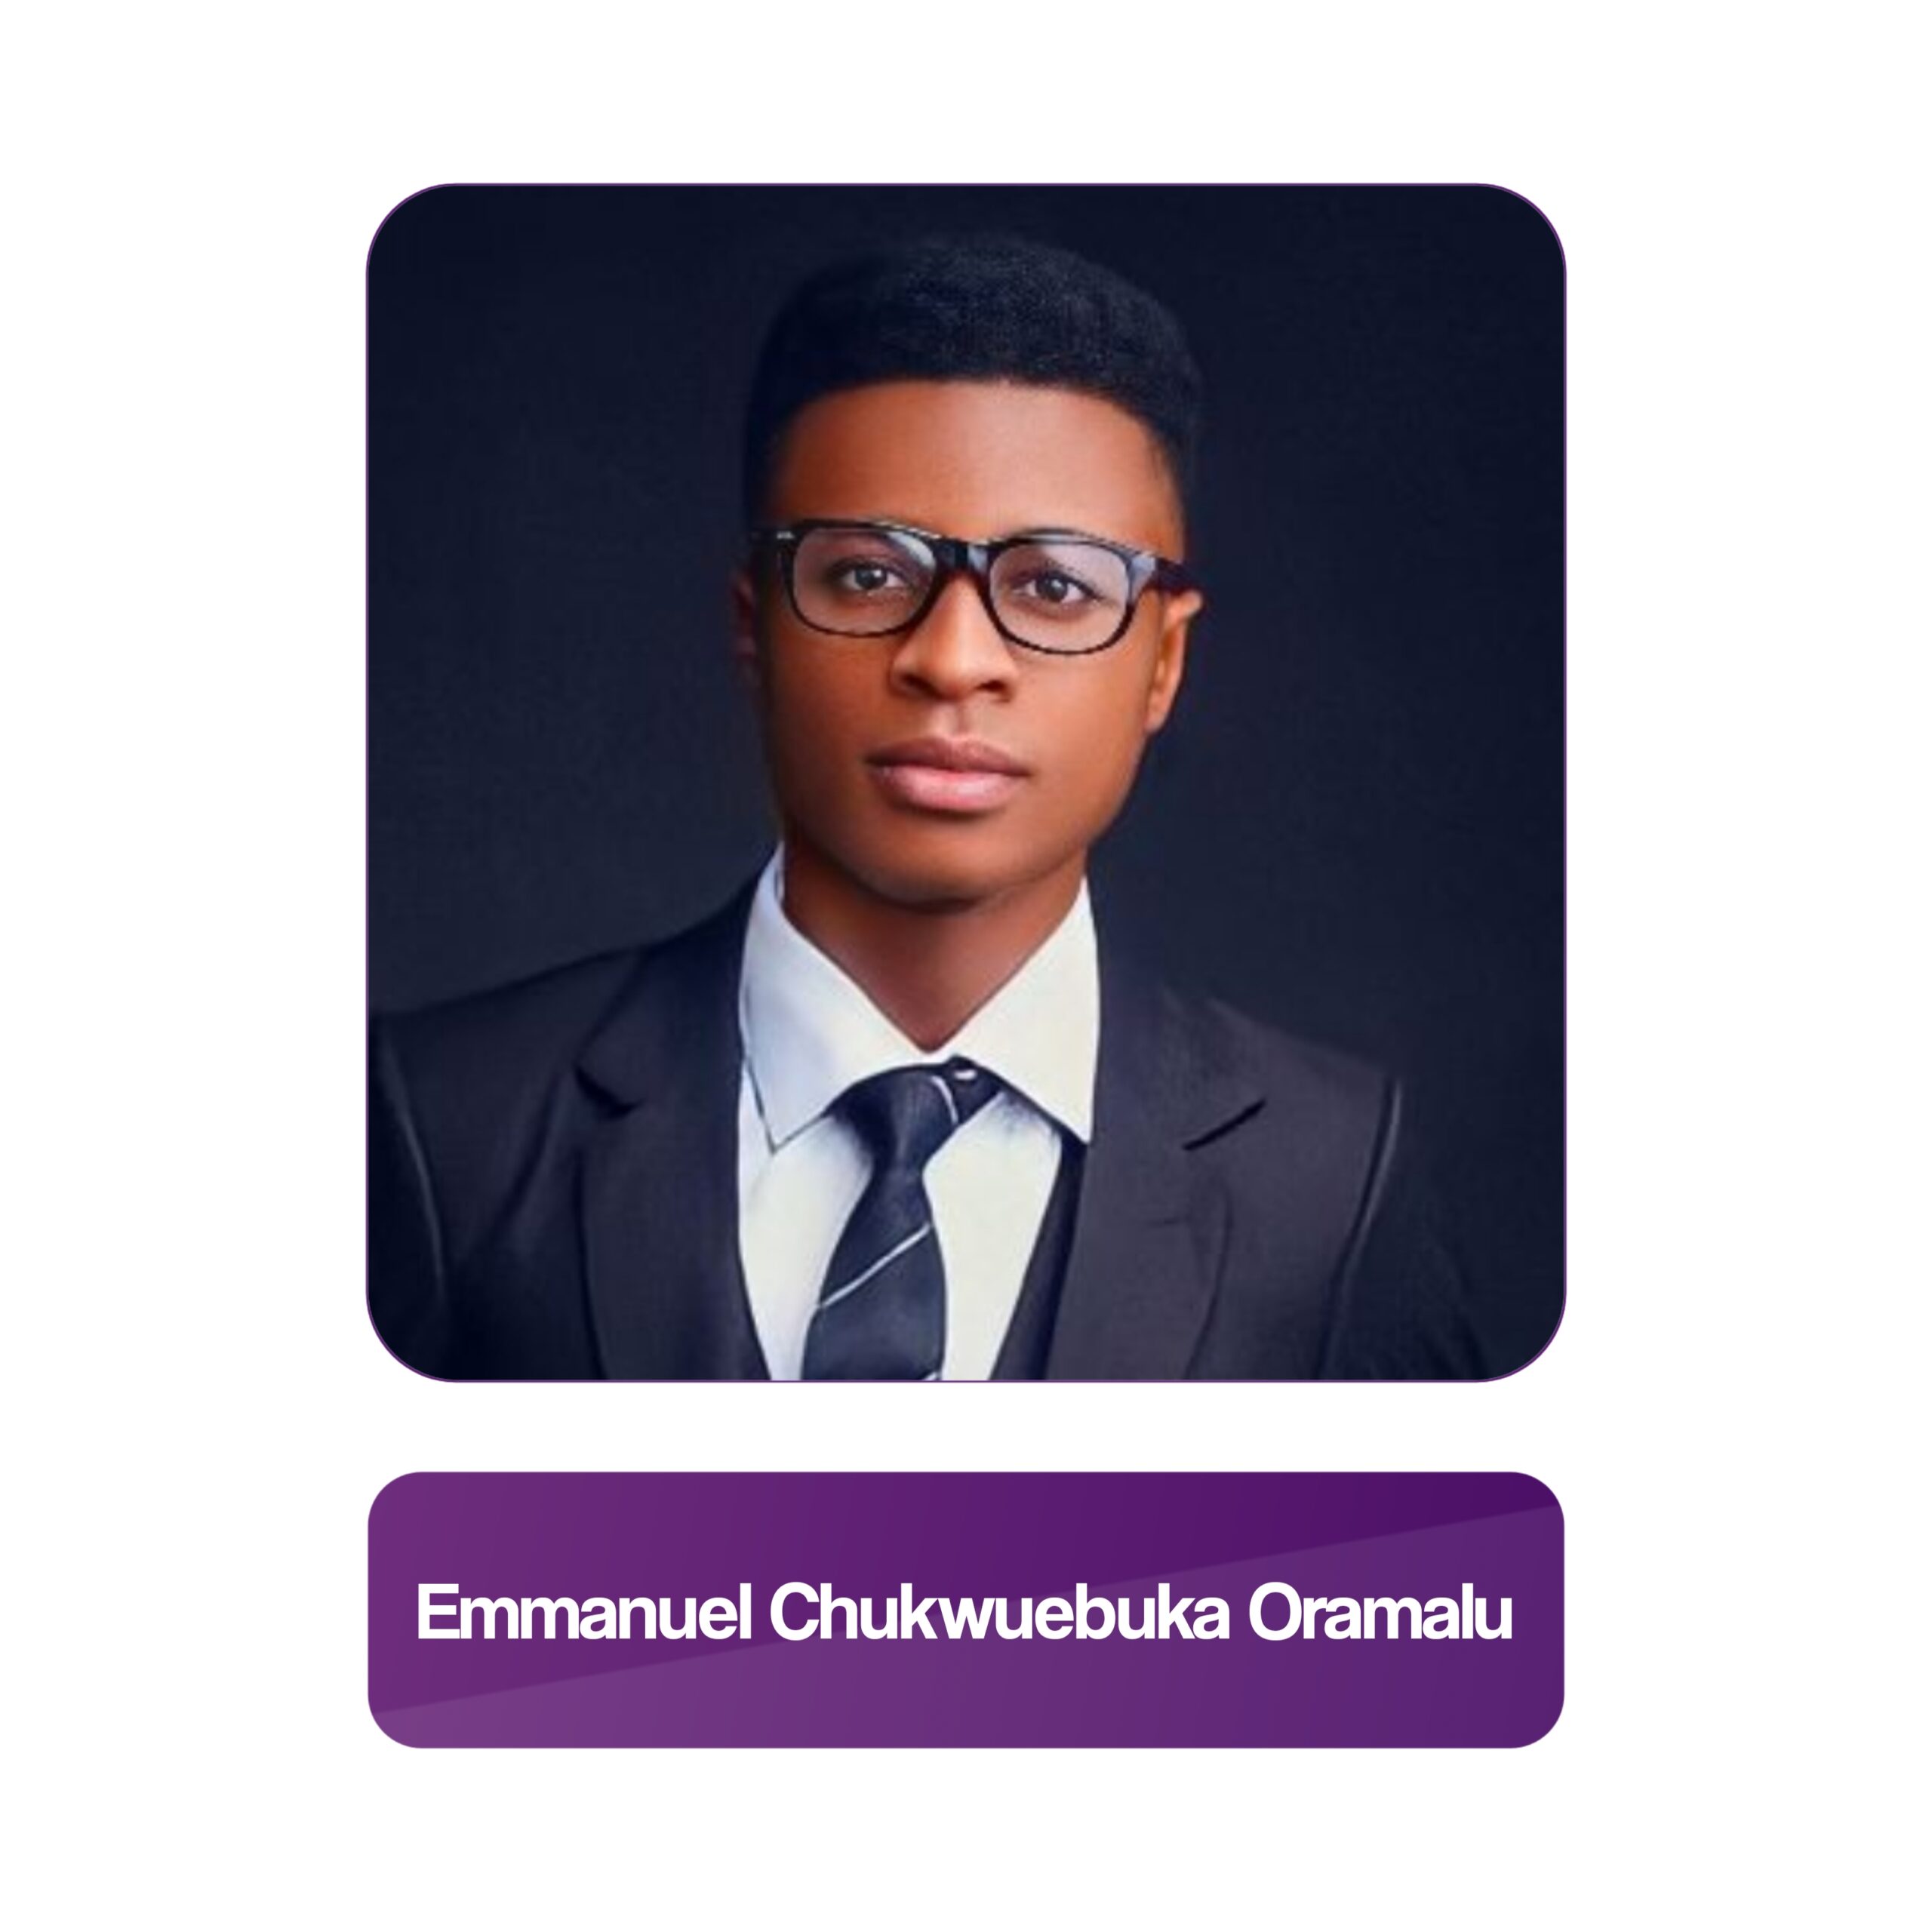 Emmanuel Chukwuebuka Oramalu